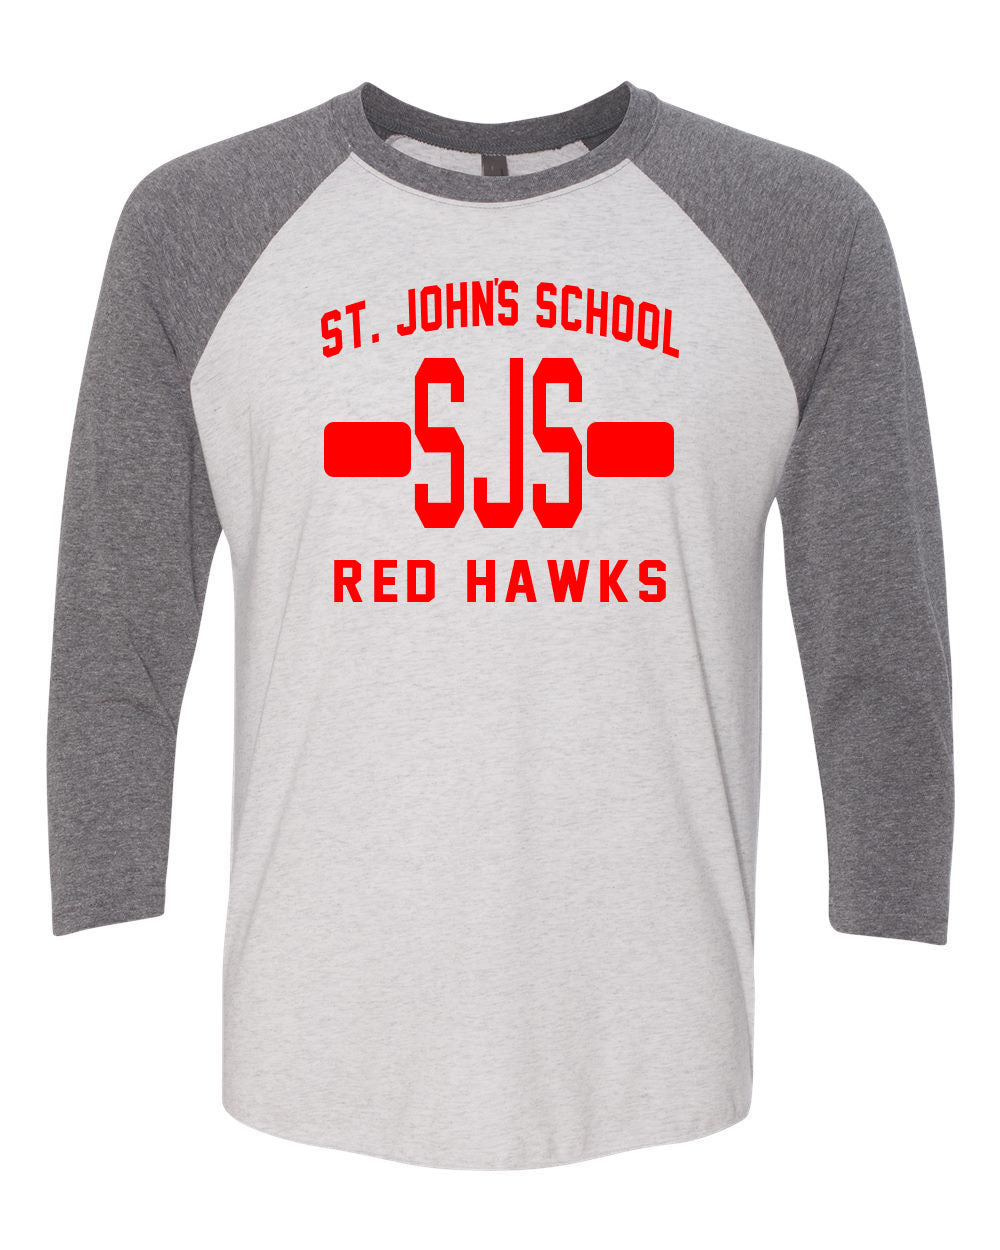 St. John's design 2 raglan shirt